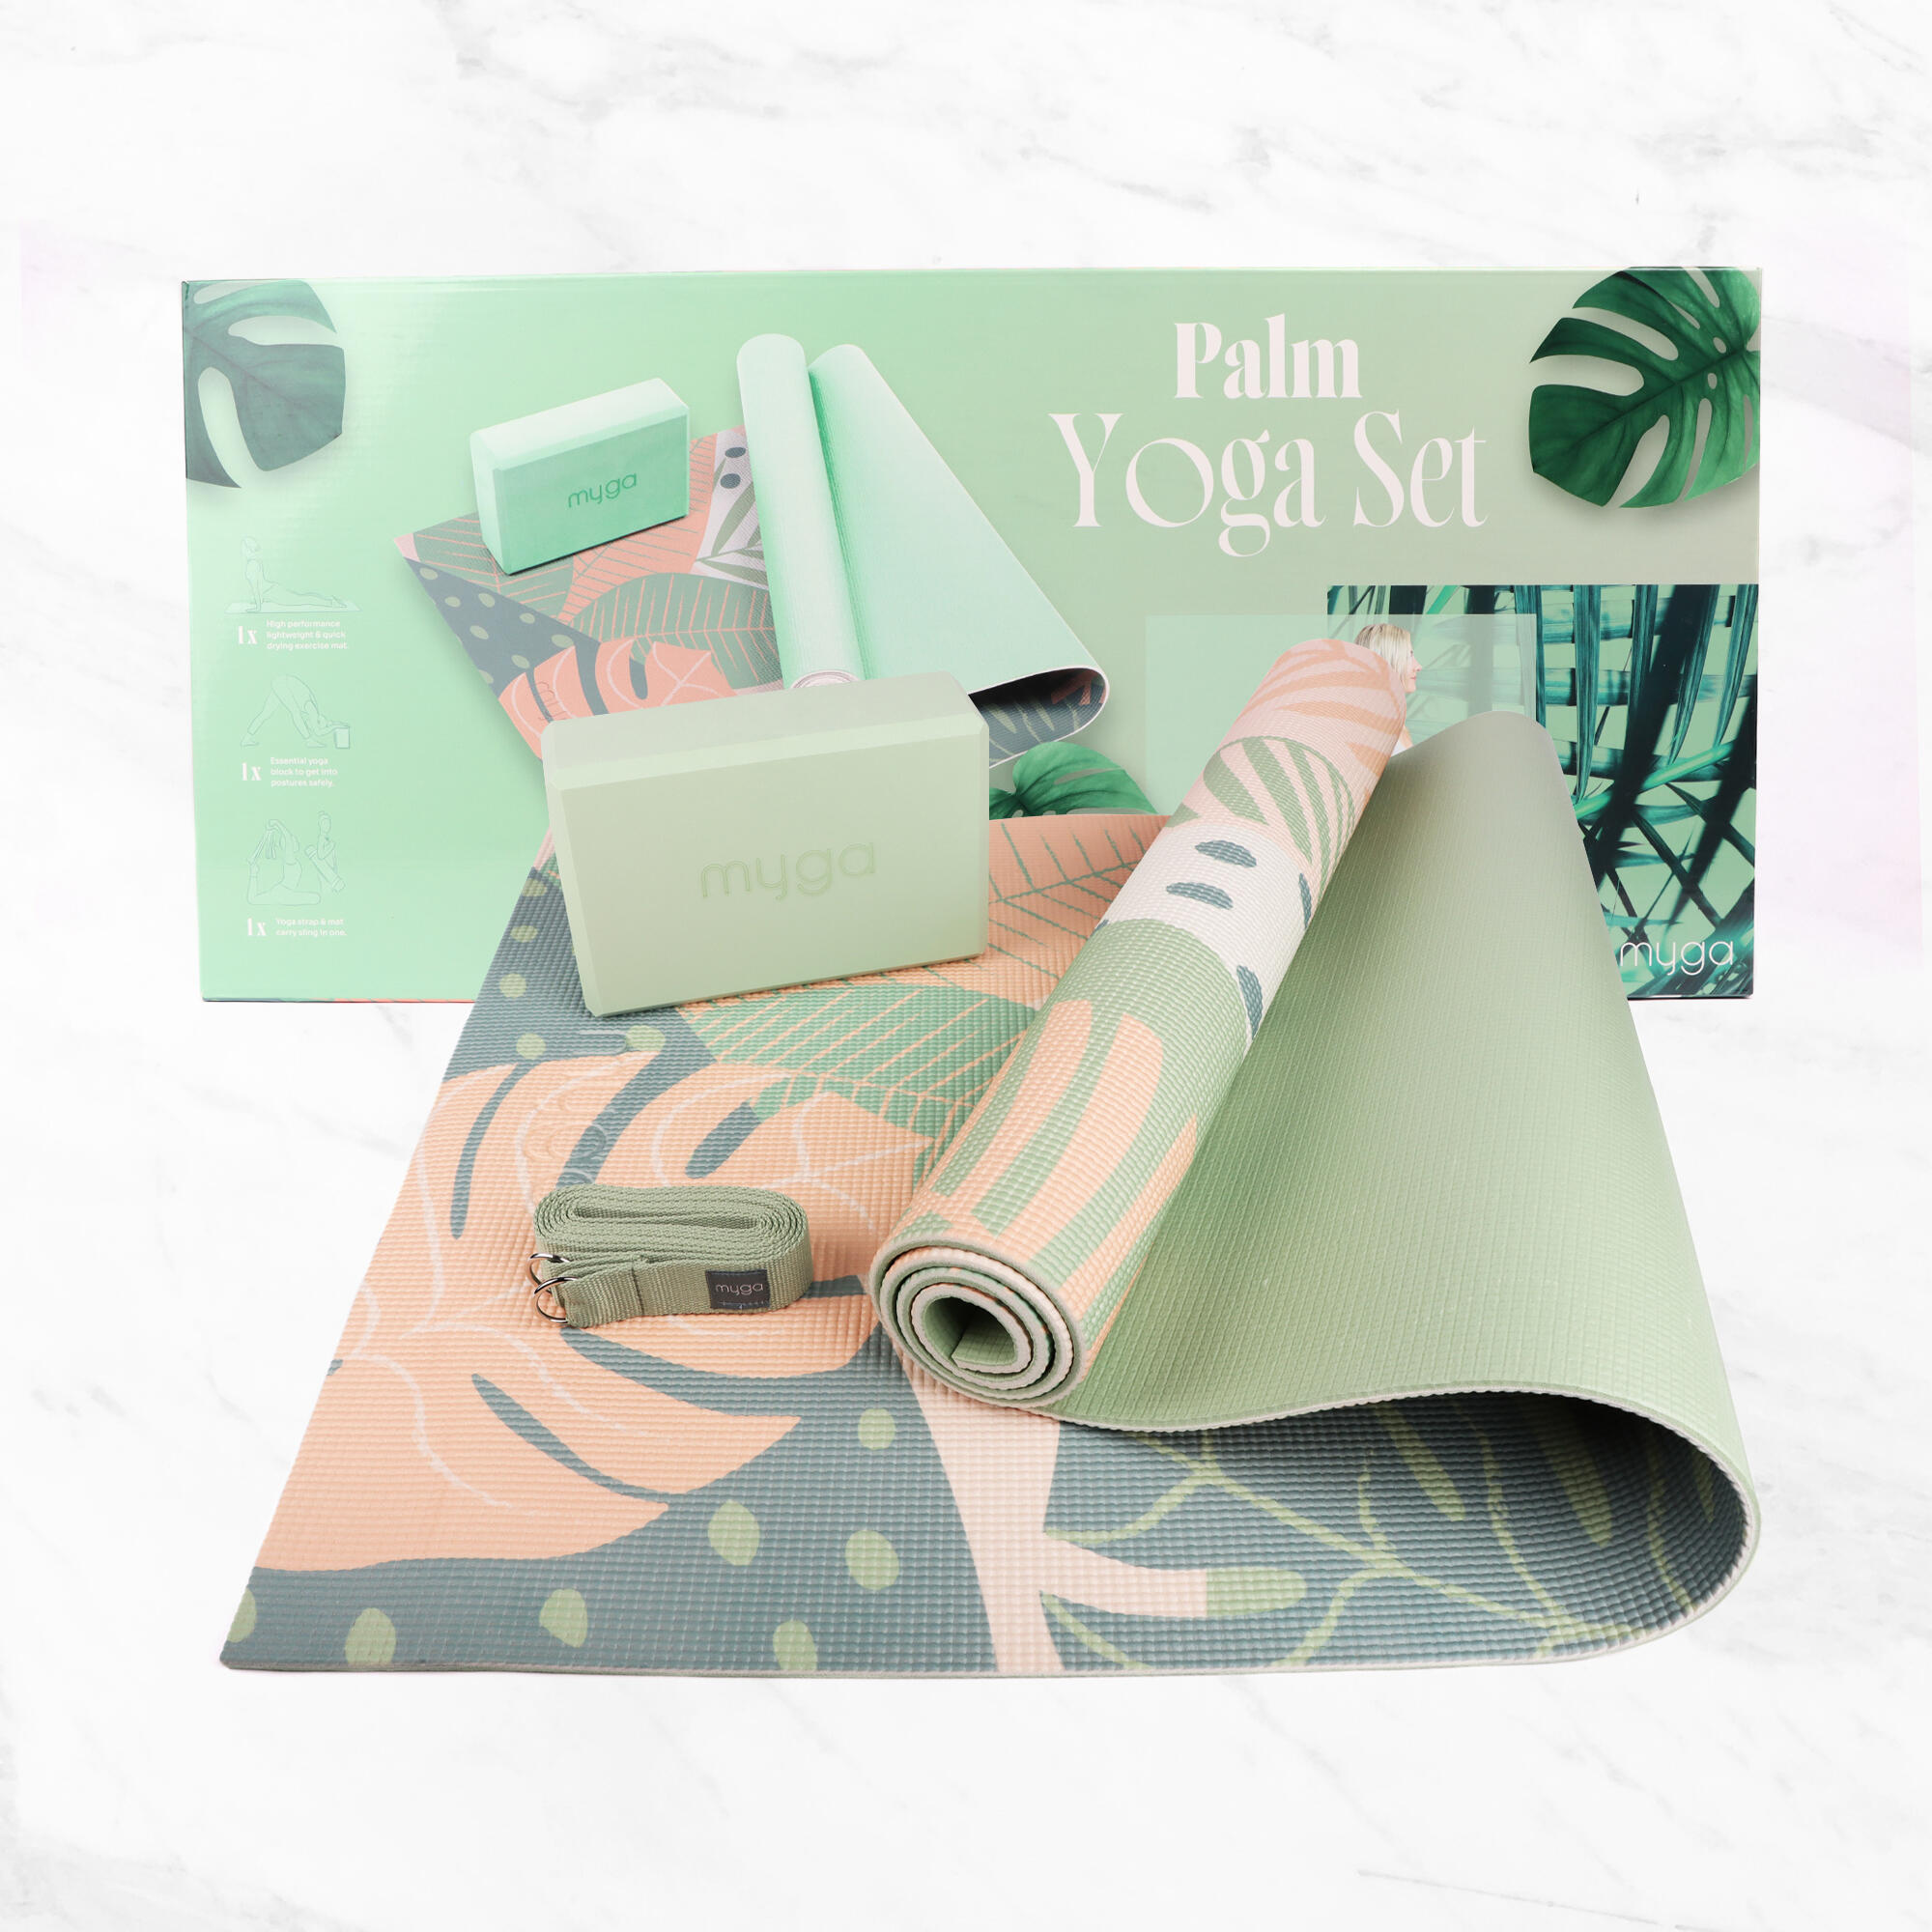 Yoga Starter Kit - Palm 1/6